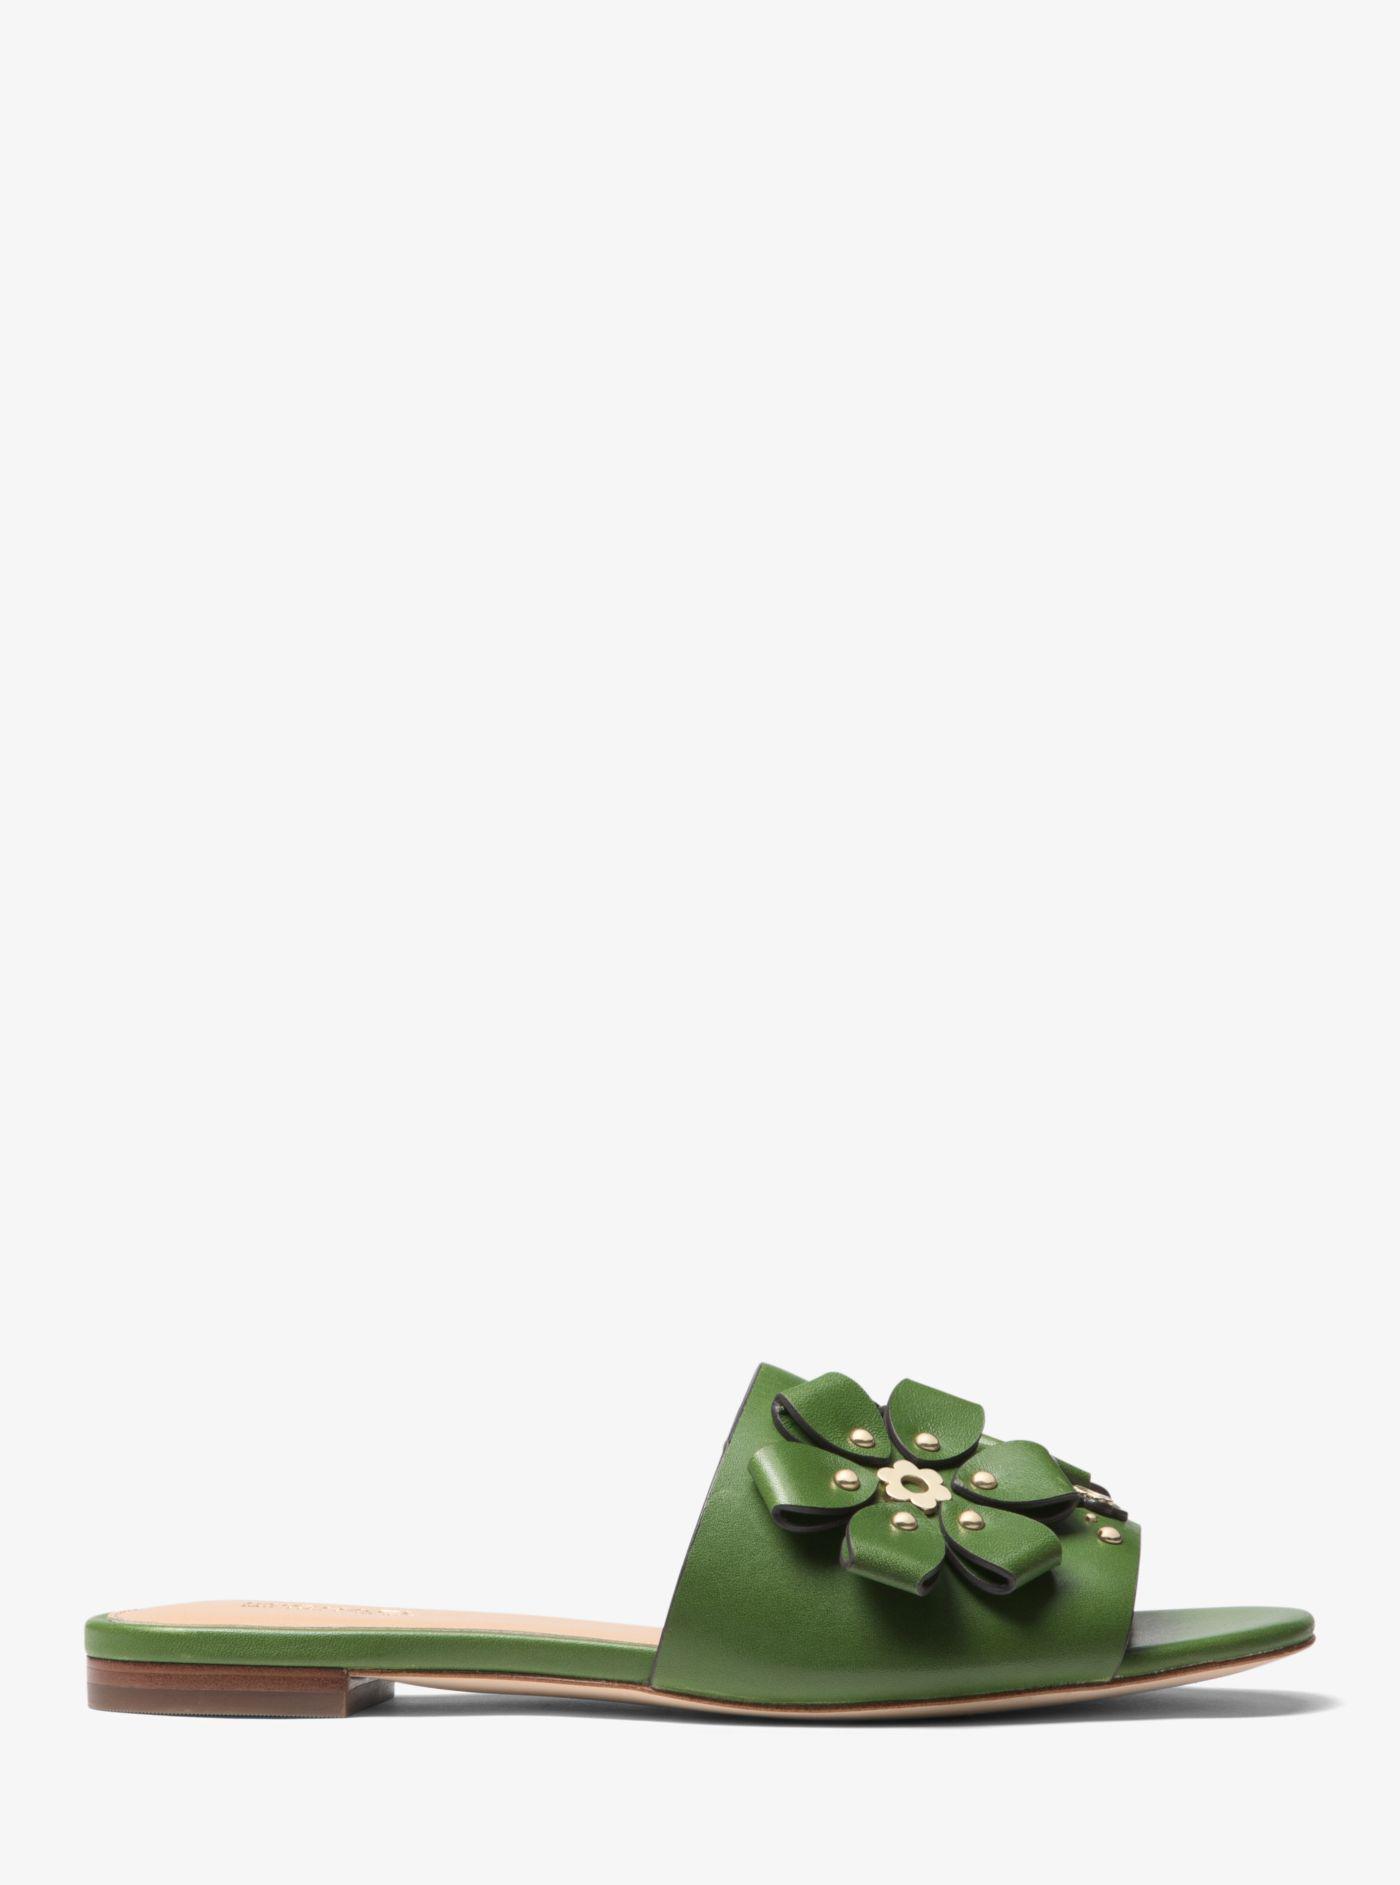 MICHAEL KORS heeled sandals for woman  Green  Michael Kors heeled sandals  40R3IMHS2A online on GIGLIOCOM